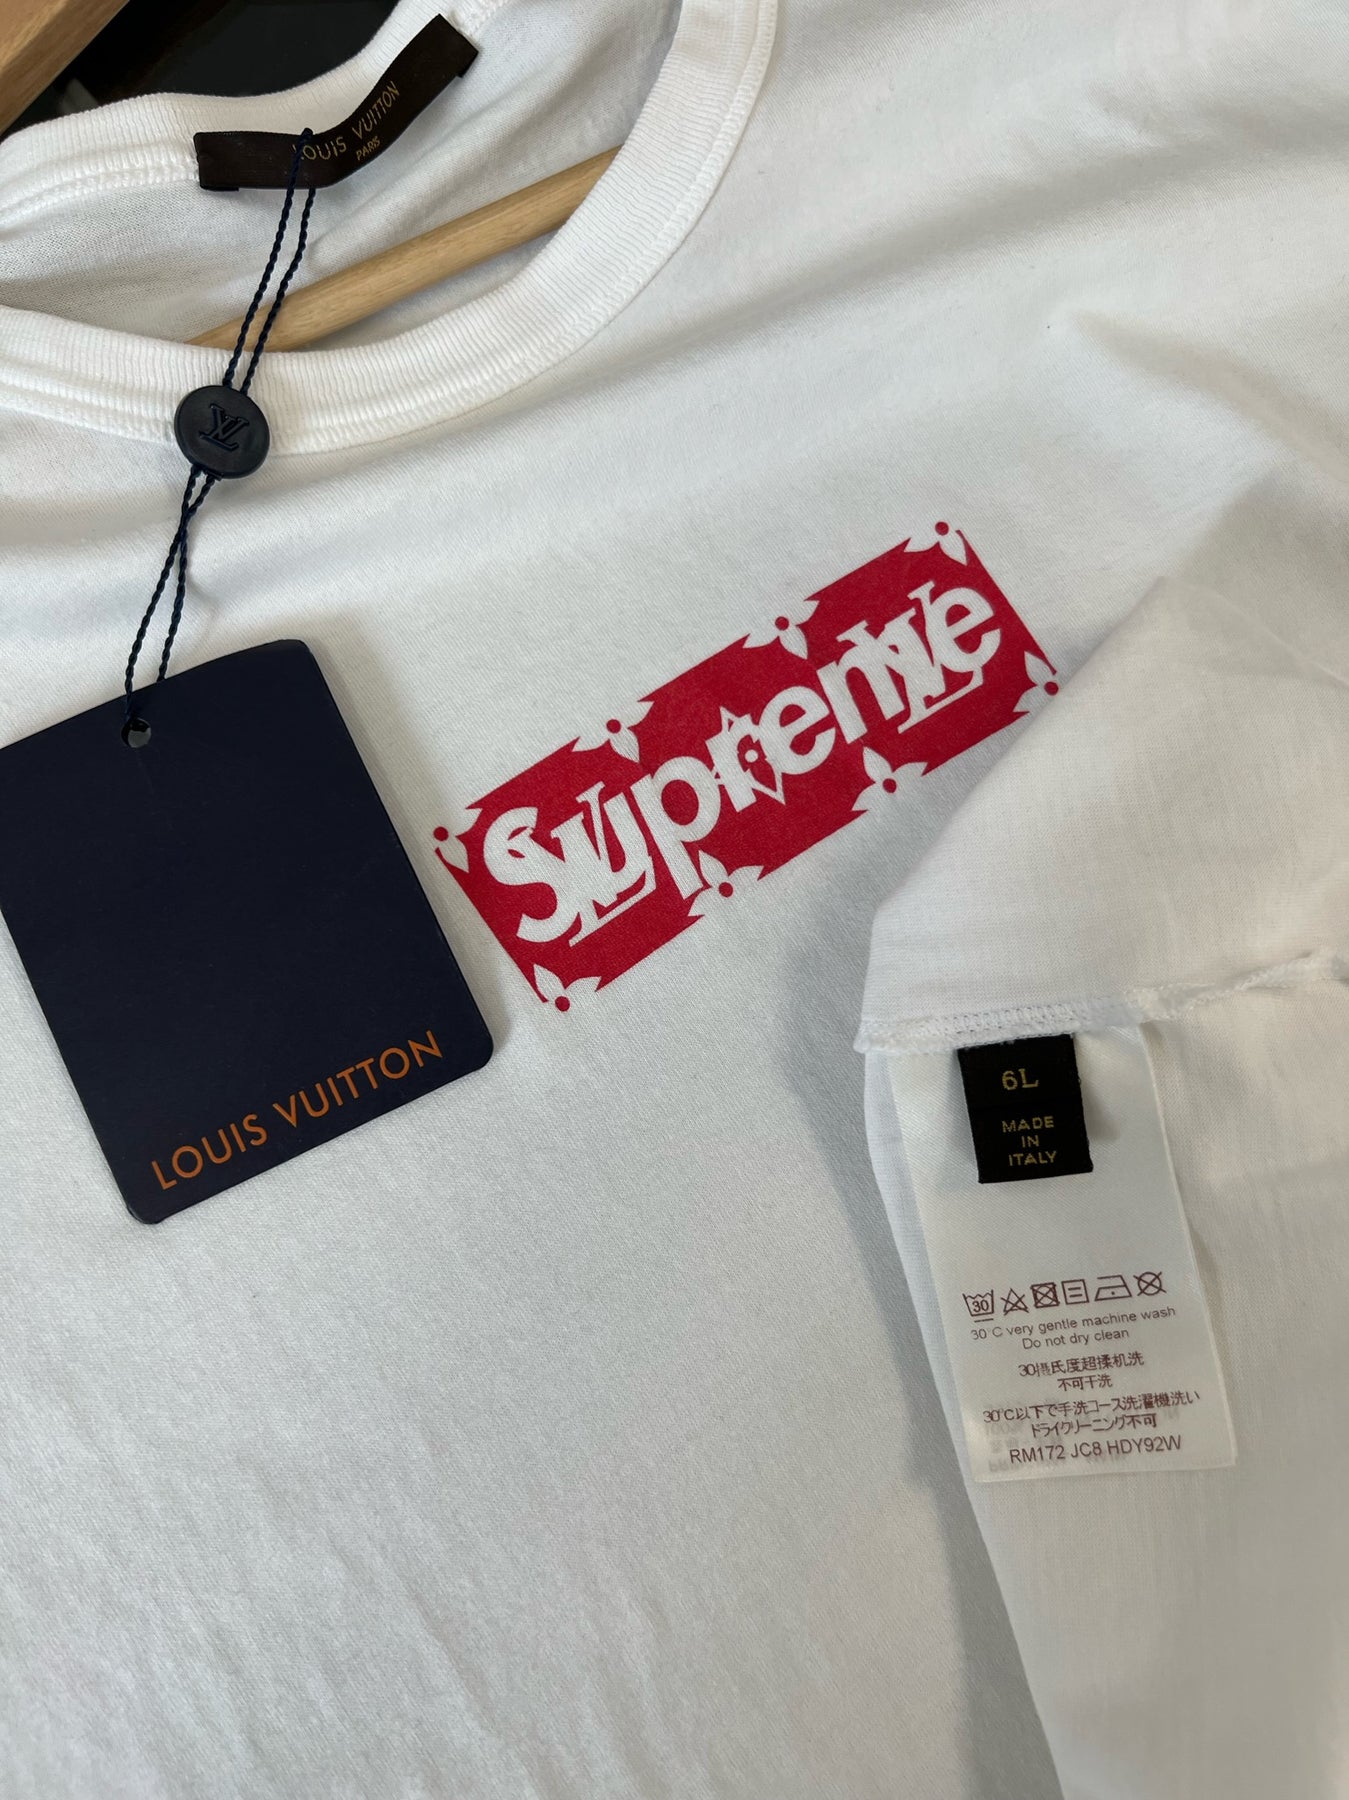 Louis Vuitton X Supreme Box Logo T Shirt  idusemiduedutr